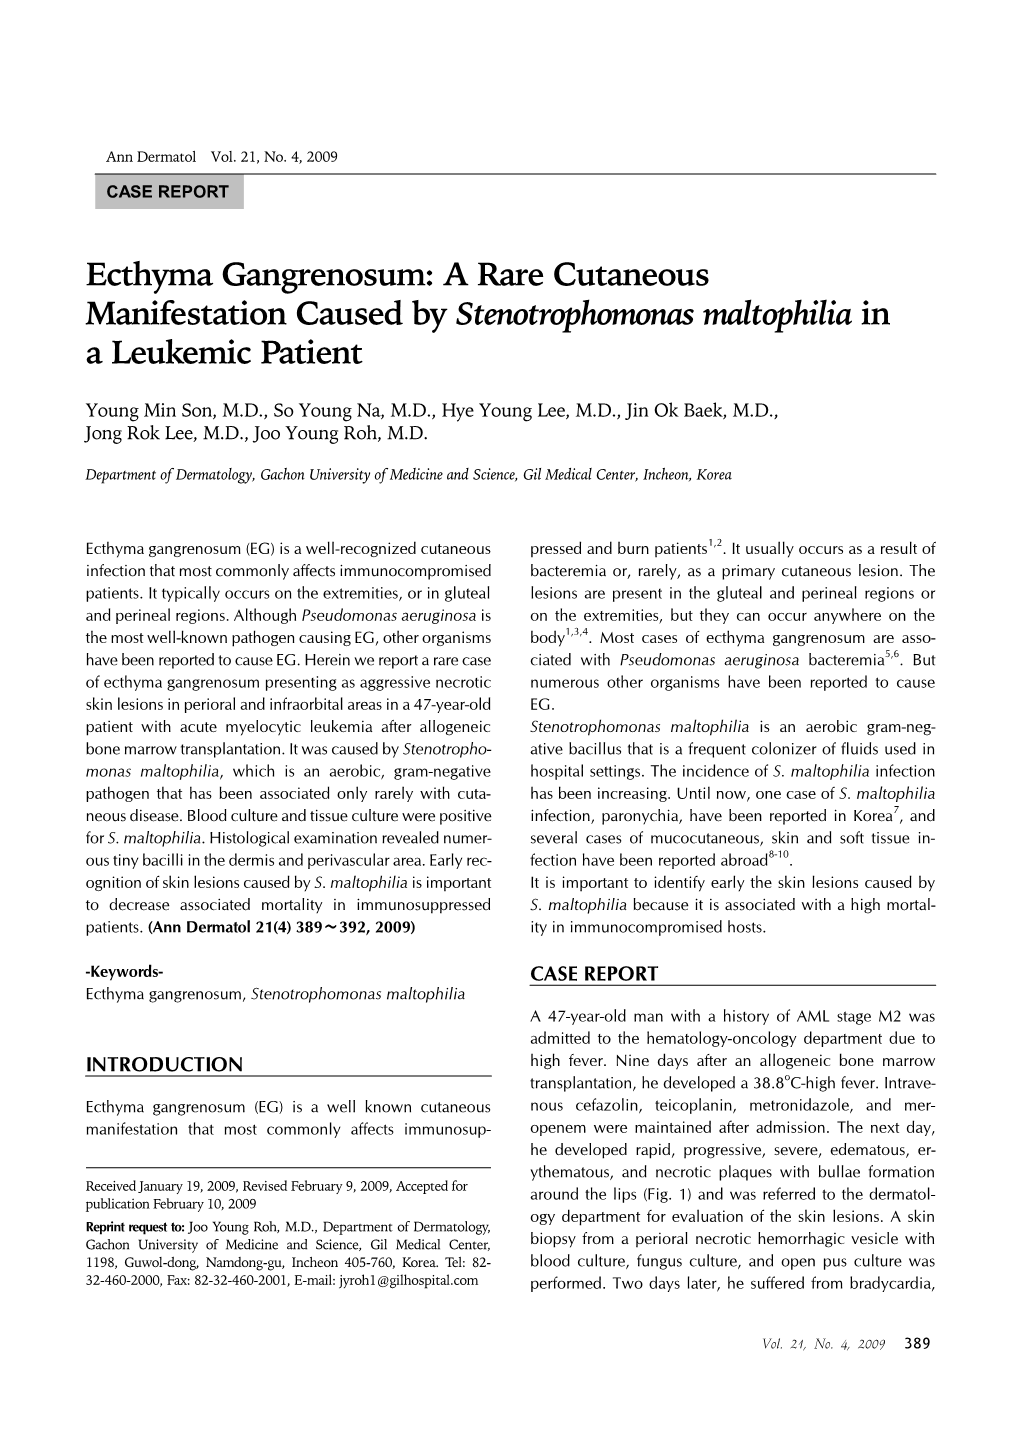 Ecthyma Gangrenosum: a Rare Cutaneous Manifestation Caused by Stenotrophomonas Maltophilia in a Leukemic Patient